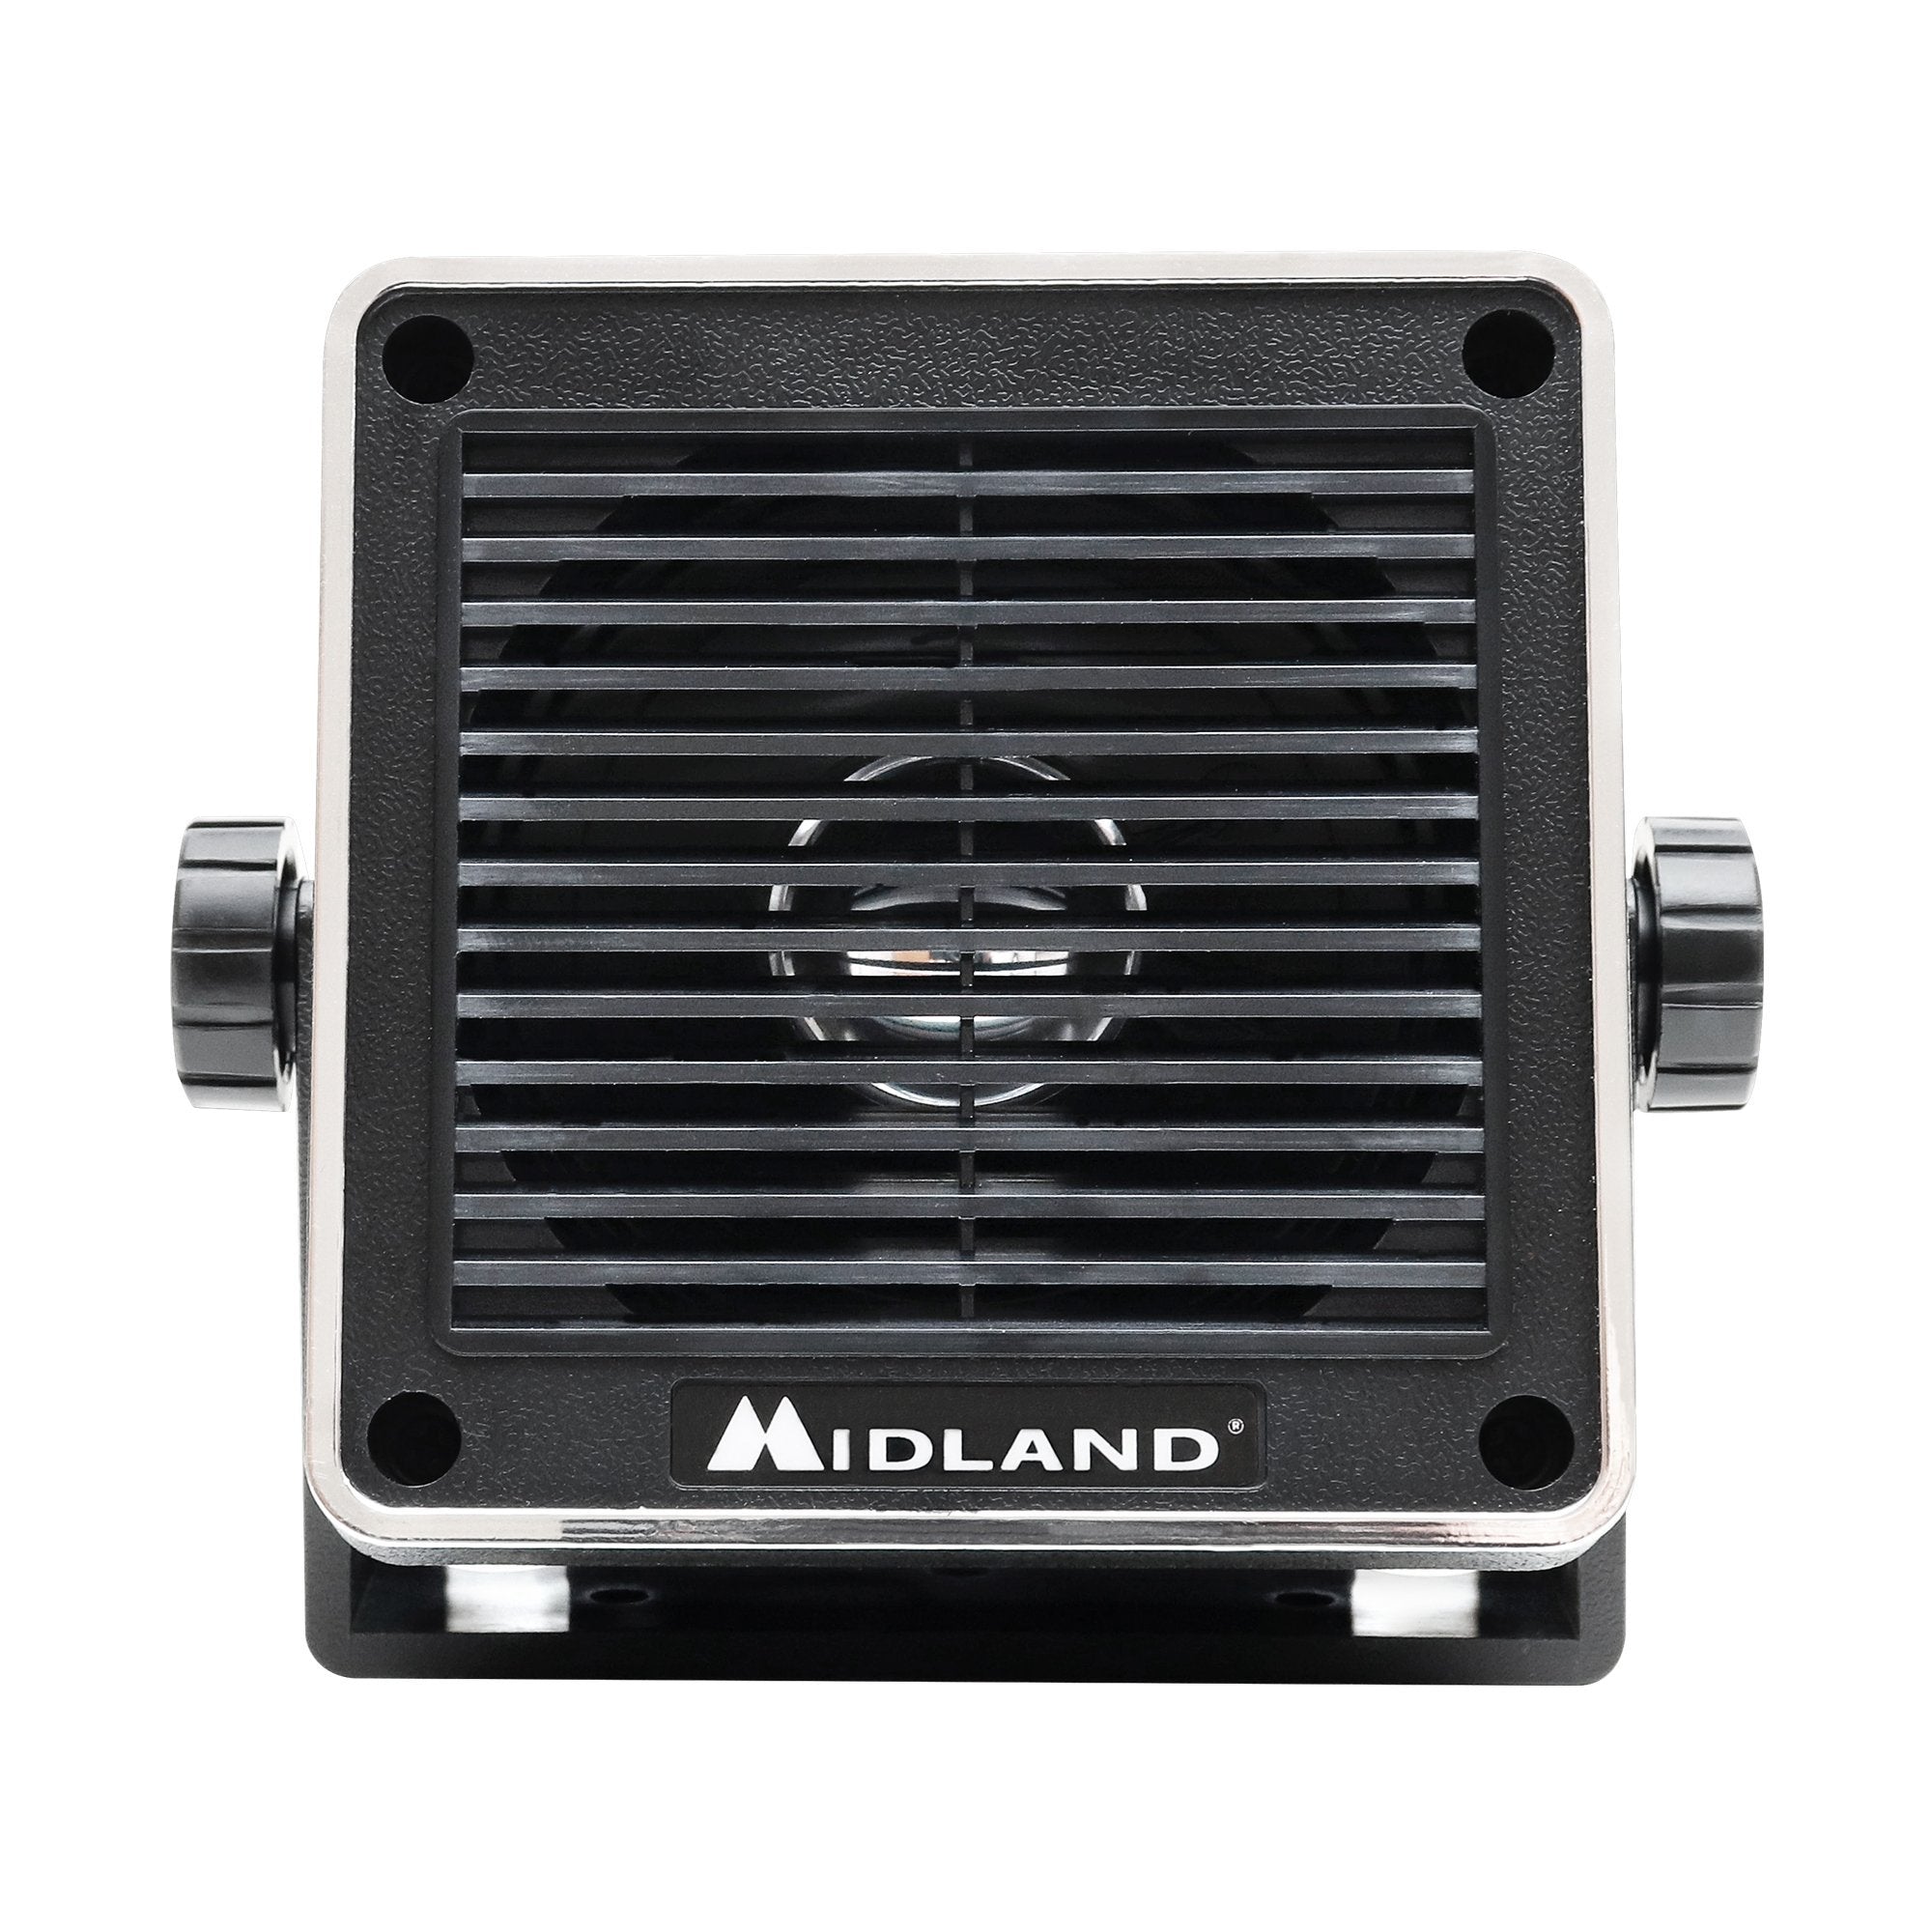 Midland Retro External Speaker